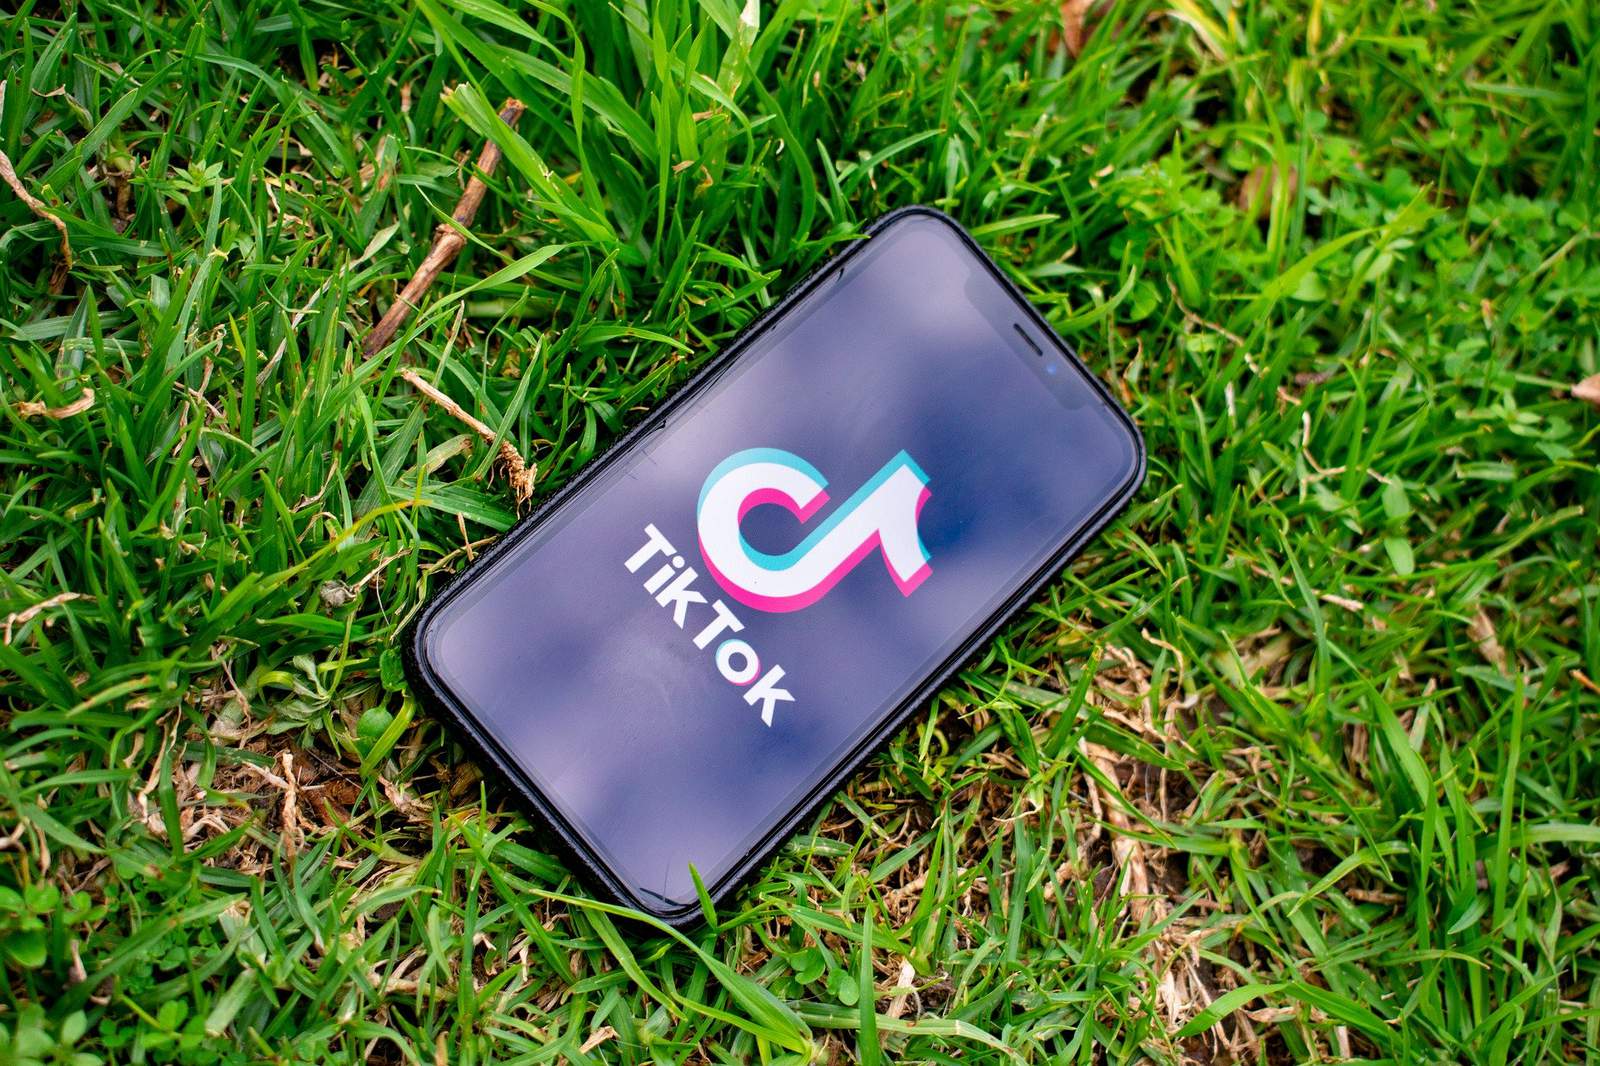 Reports: Amazon bars video app TikTok on workers phones